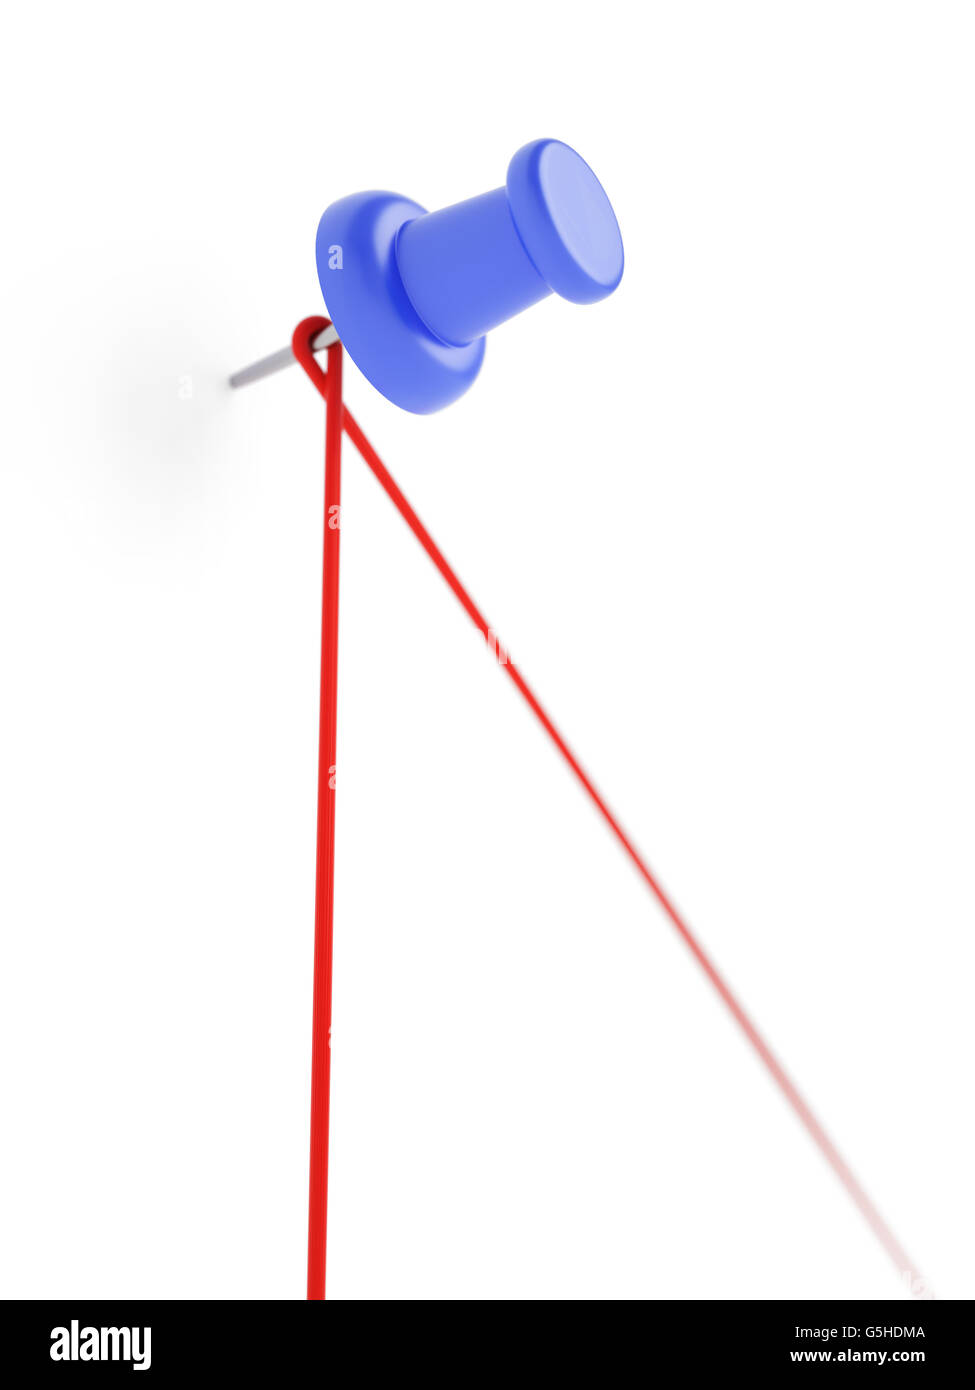 Blau-polig, angeschlossen an andere durch Seil Nahaufnahme 3D-Illustration Stockfoto